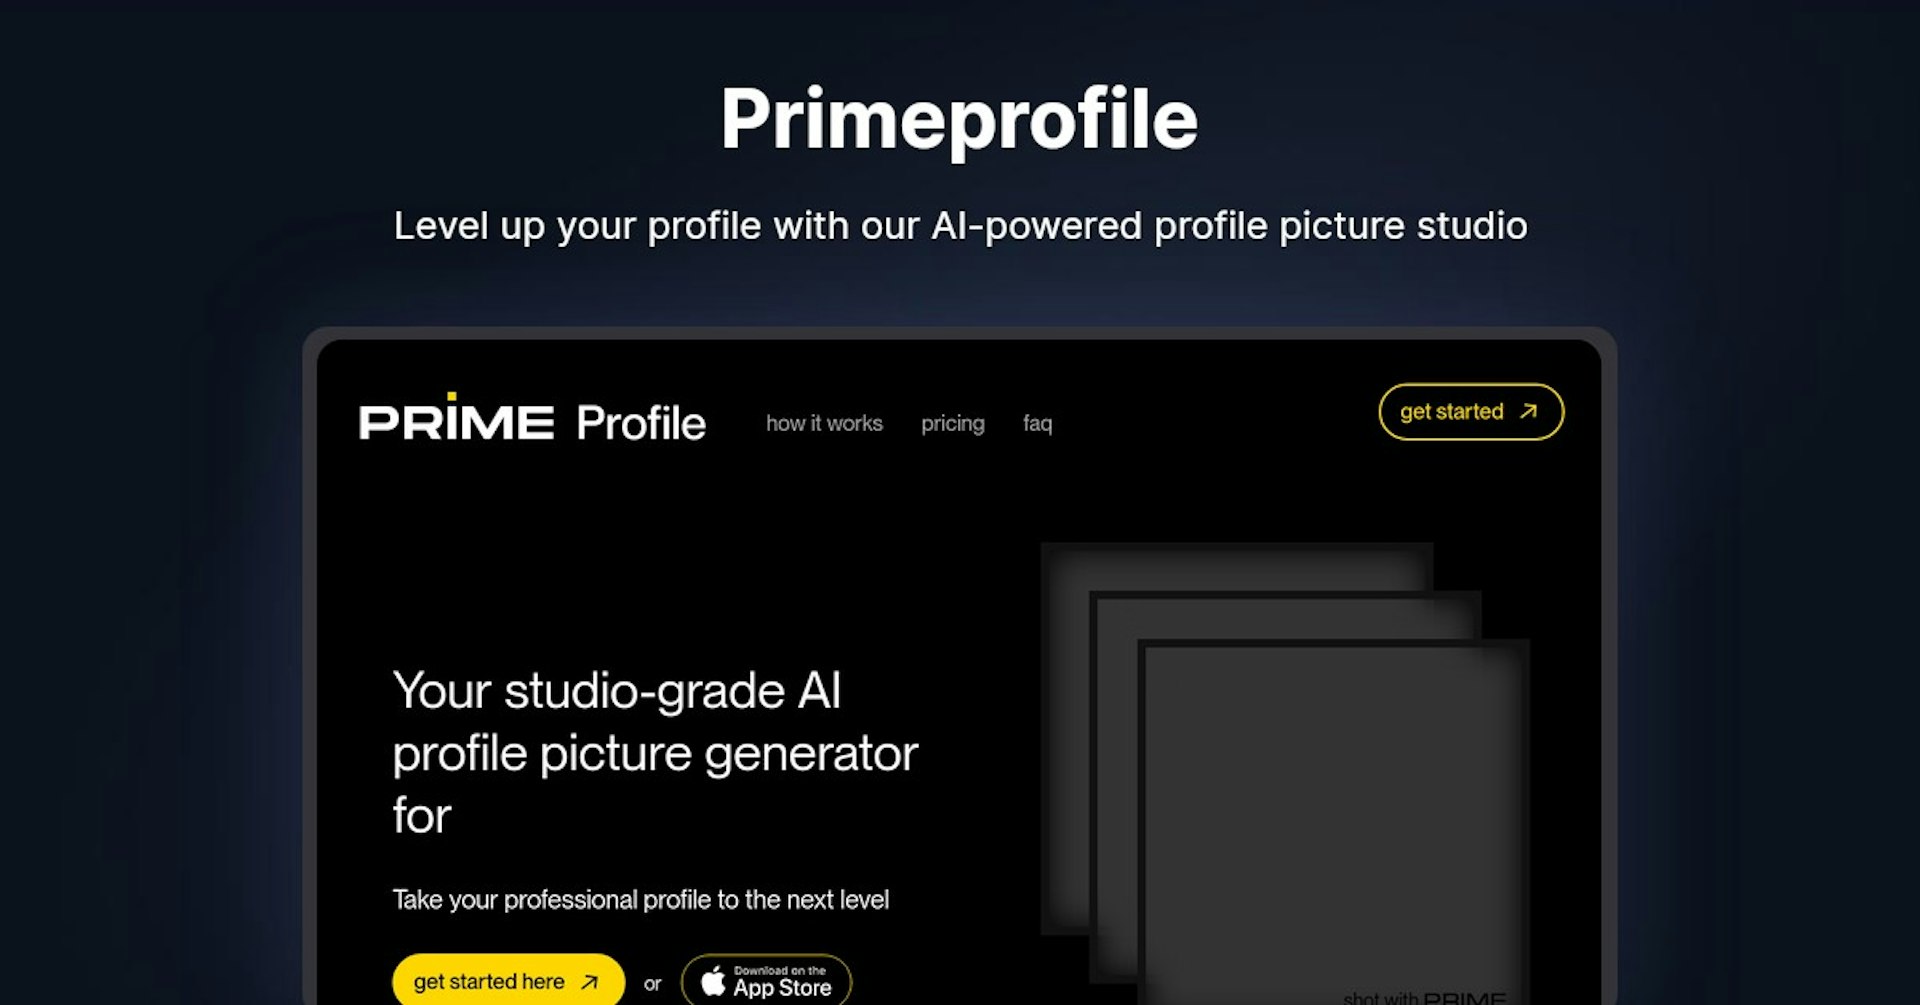 Primeprofile